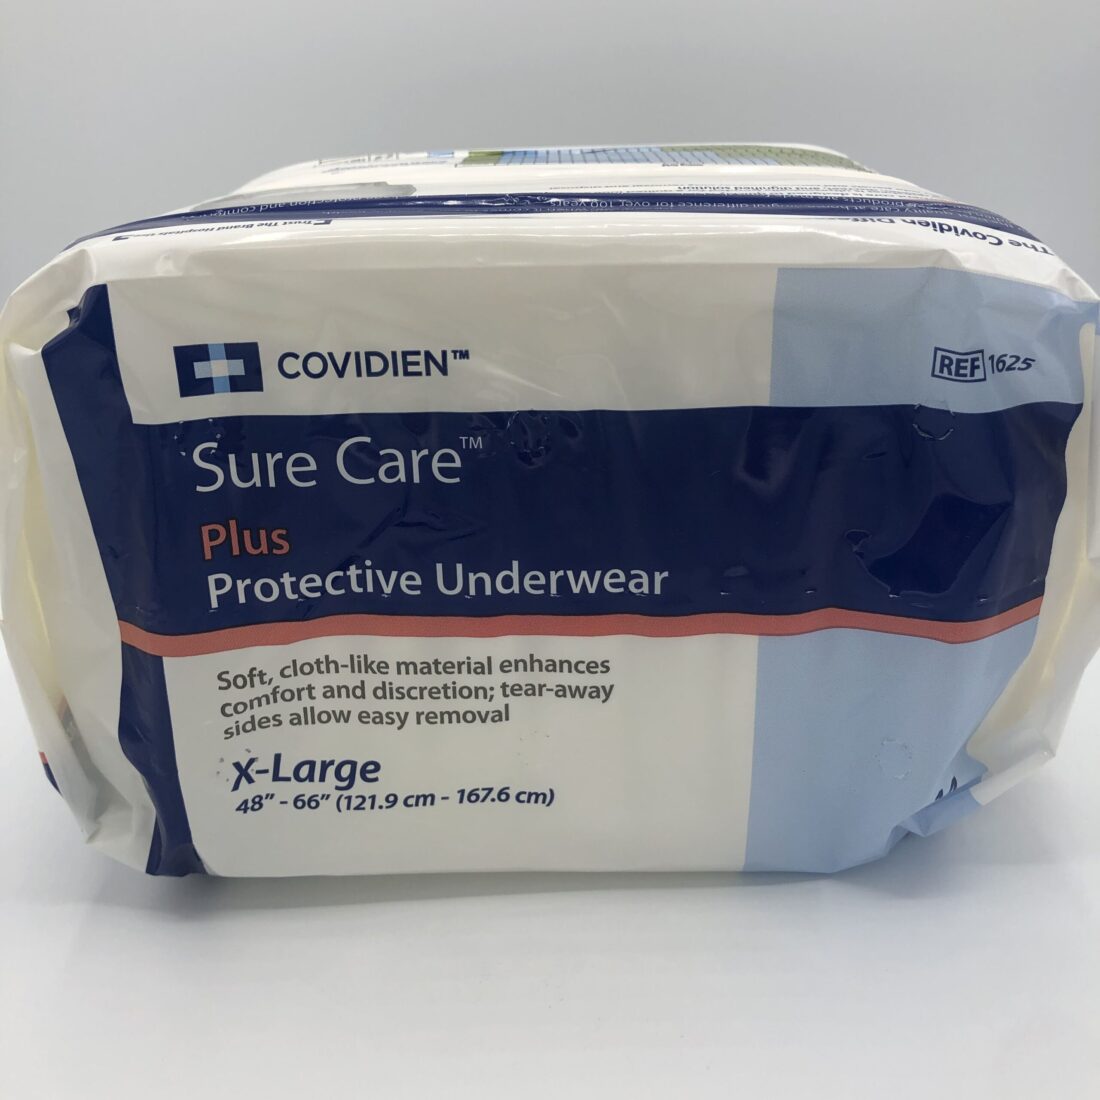 Covidien 1625 Sure Care Protective Underwear X-Large (Case/4)